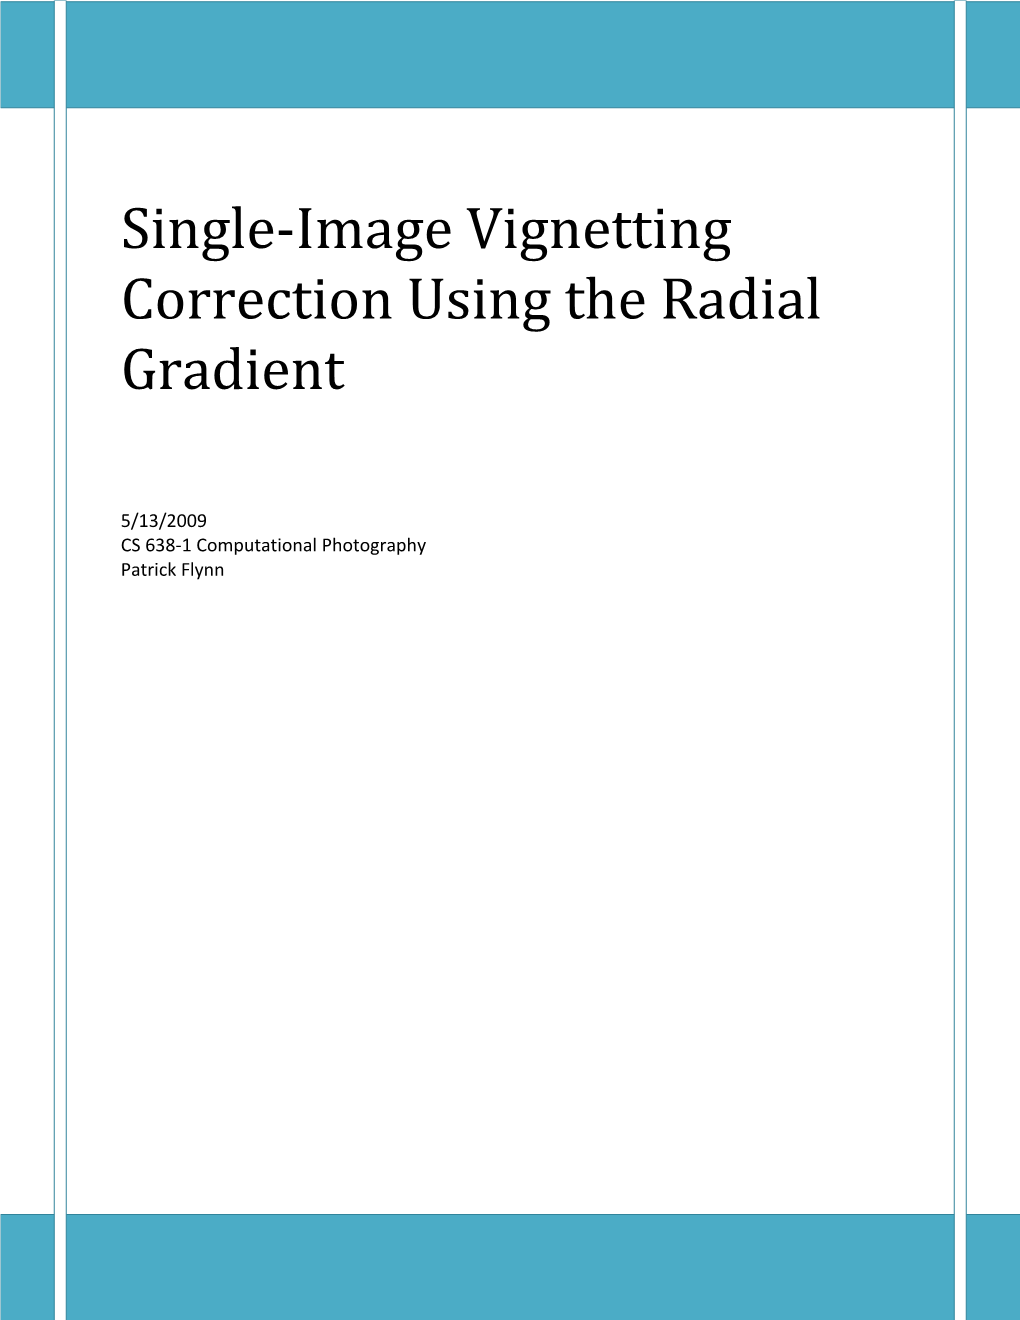 Single-Image Vignetting Correction Using the Radial Gradient